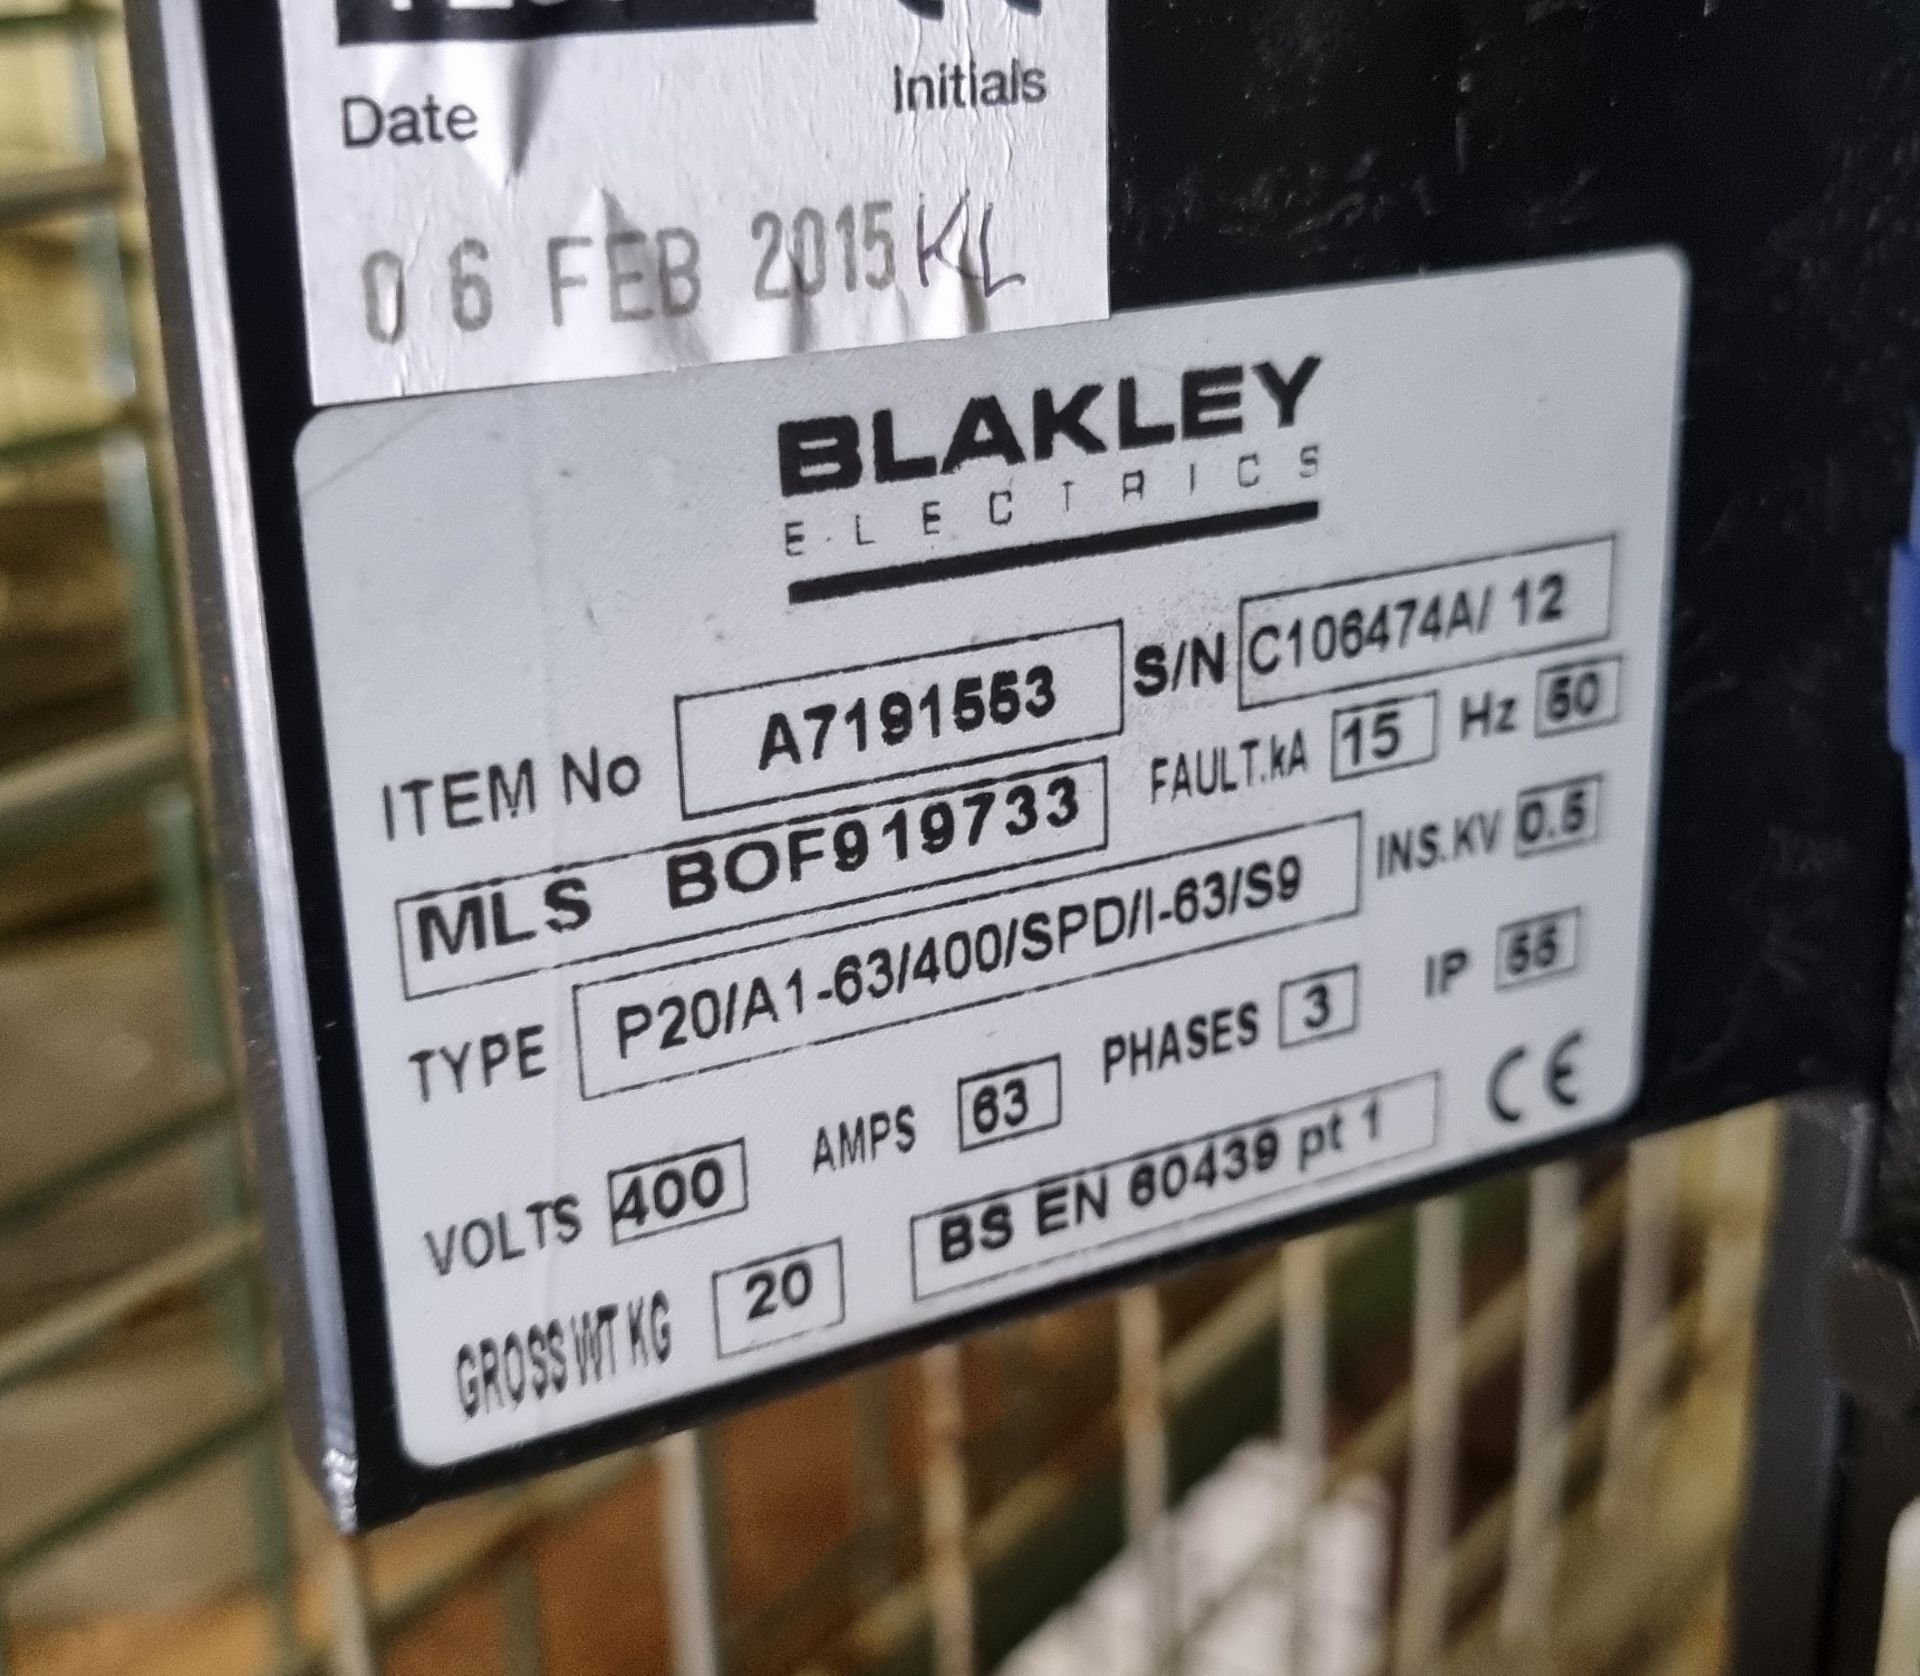 Blakley Insulated Distribution Assembly P20/A1-63/400/SPD/I-63/S9 - Bild 3 aus 3